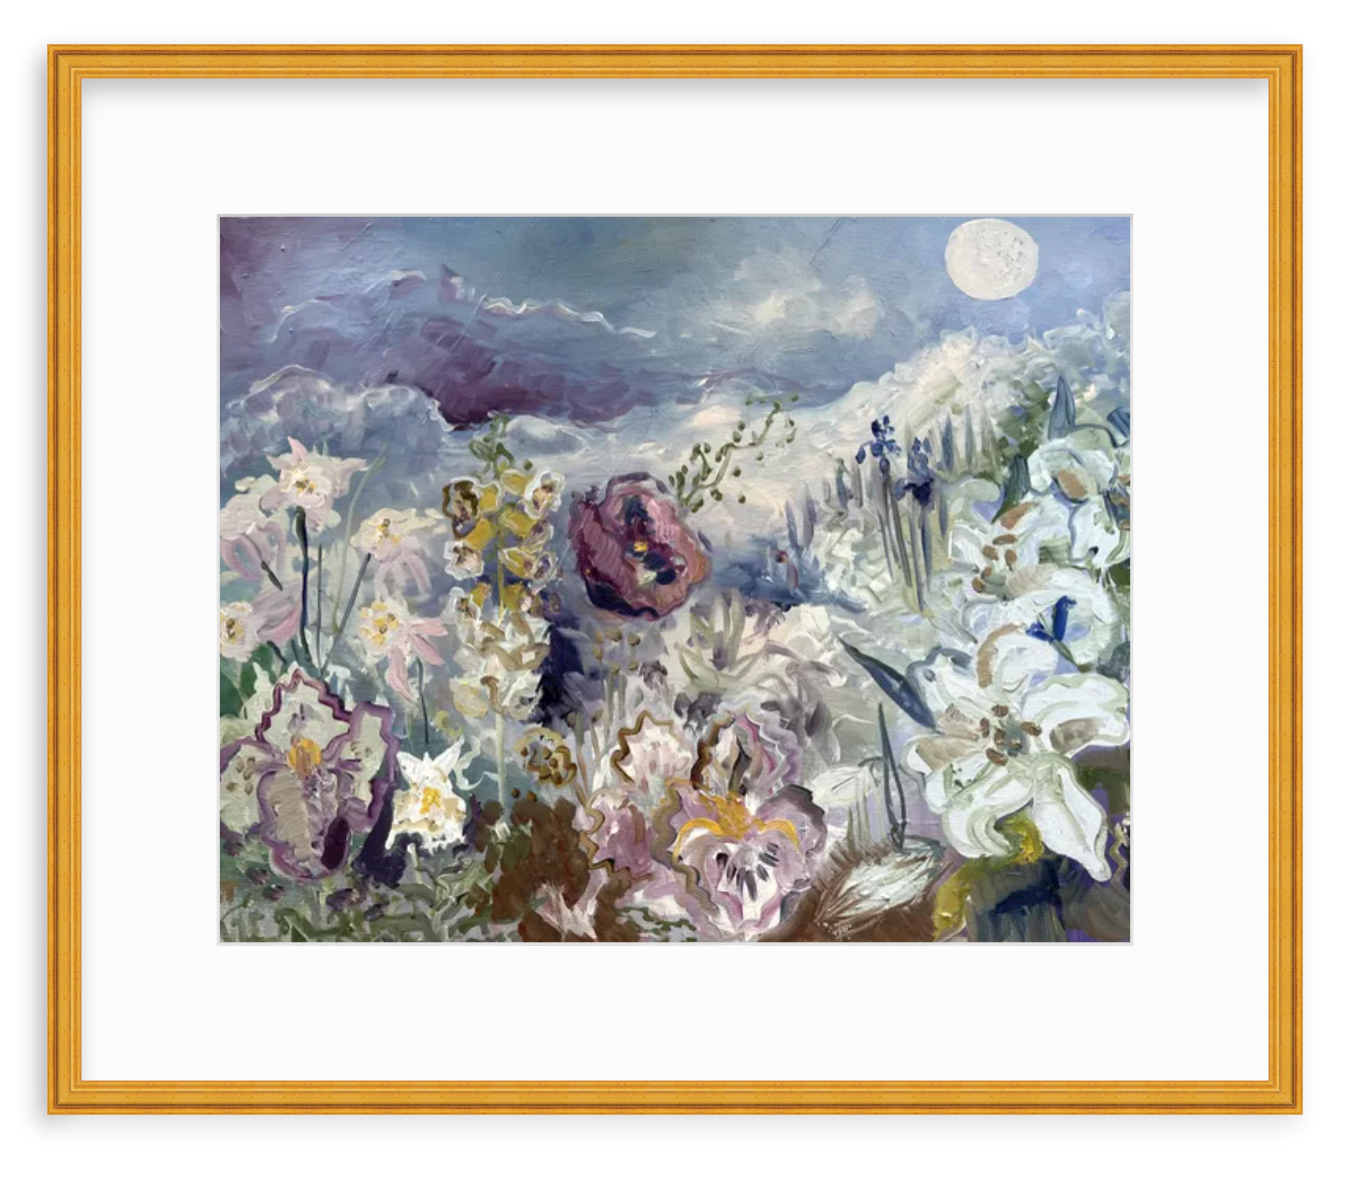 FRAMED PRINT "Spring Moon Garden" a Horizontal Fine Art Giclee Reproduction